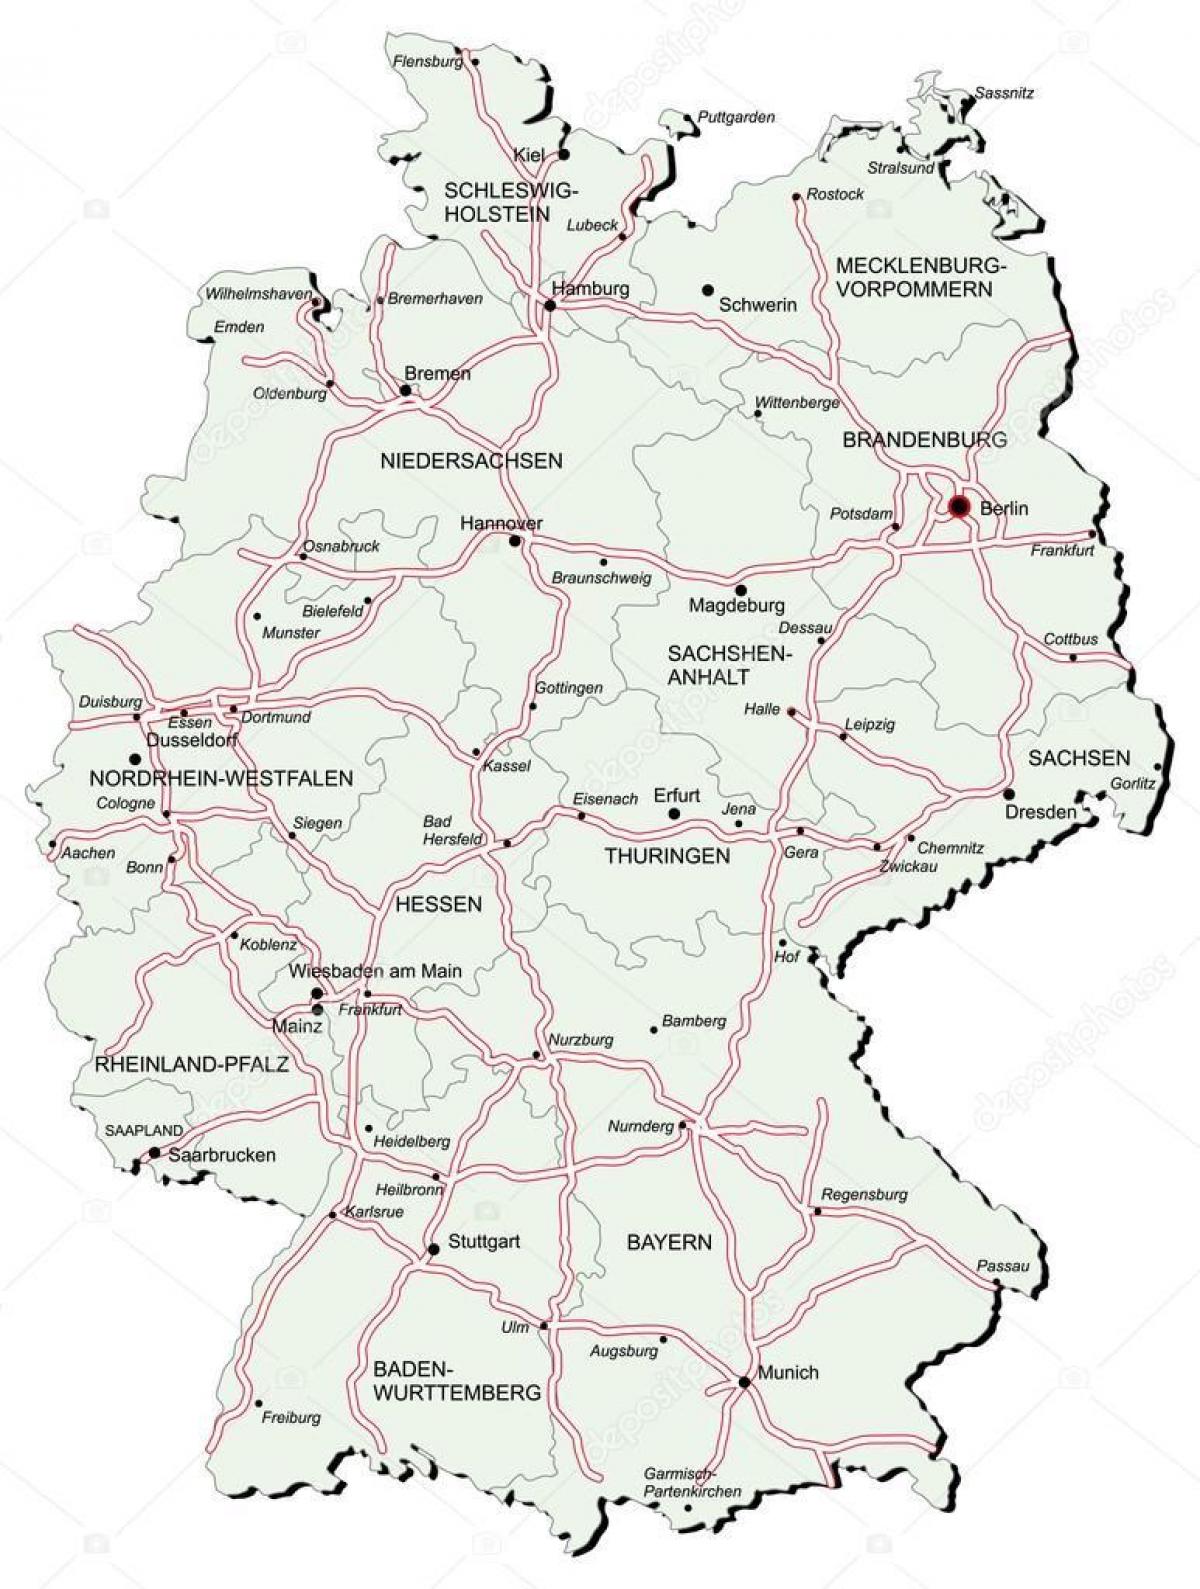 bielefeld karta Autobahn i Tyskland karta   Tyskland på autobahn karta (Västra  bielefeld karta